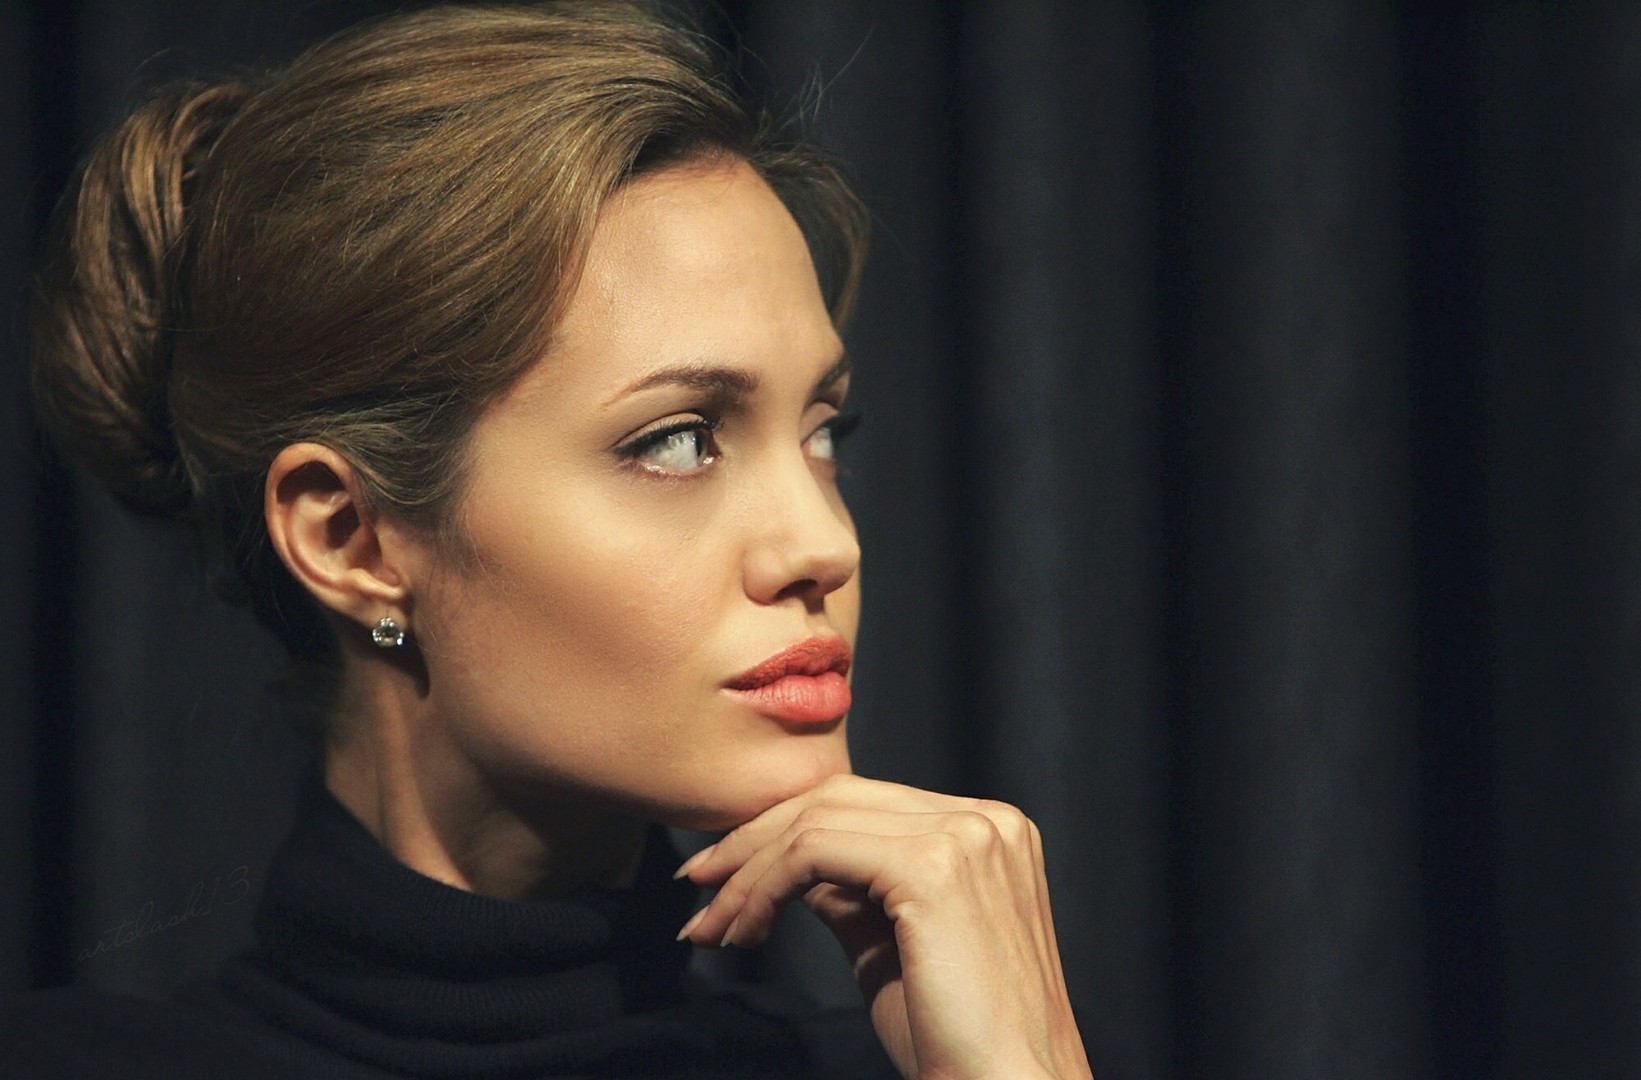 People 1641x1080 Angelina Jolie actress women brunette hairbun profile looking away thinking ear studs portrait women indoors face red lipstick American women